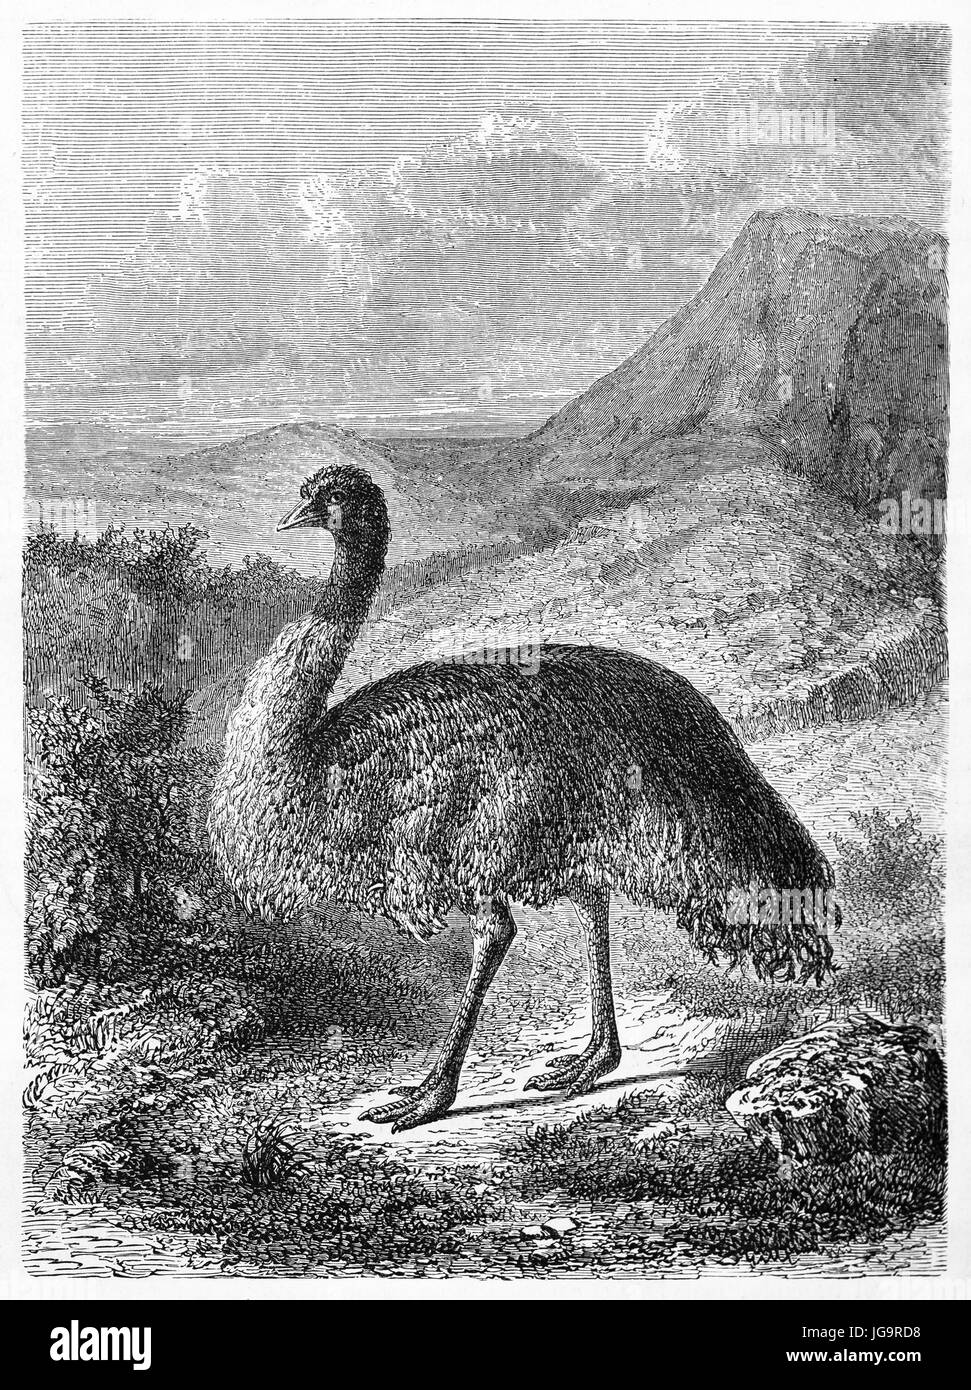 Old illustration of Emu (Dromaius novaehollandiae). Created by Rouier and Huyot, published on Le Tour du Monde, Paris, 1861 Stock Photo